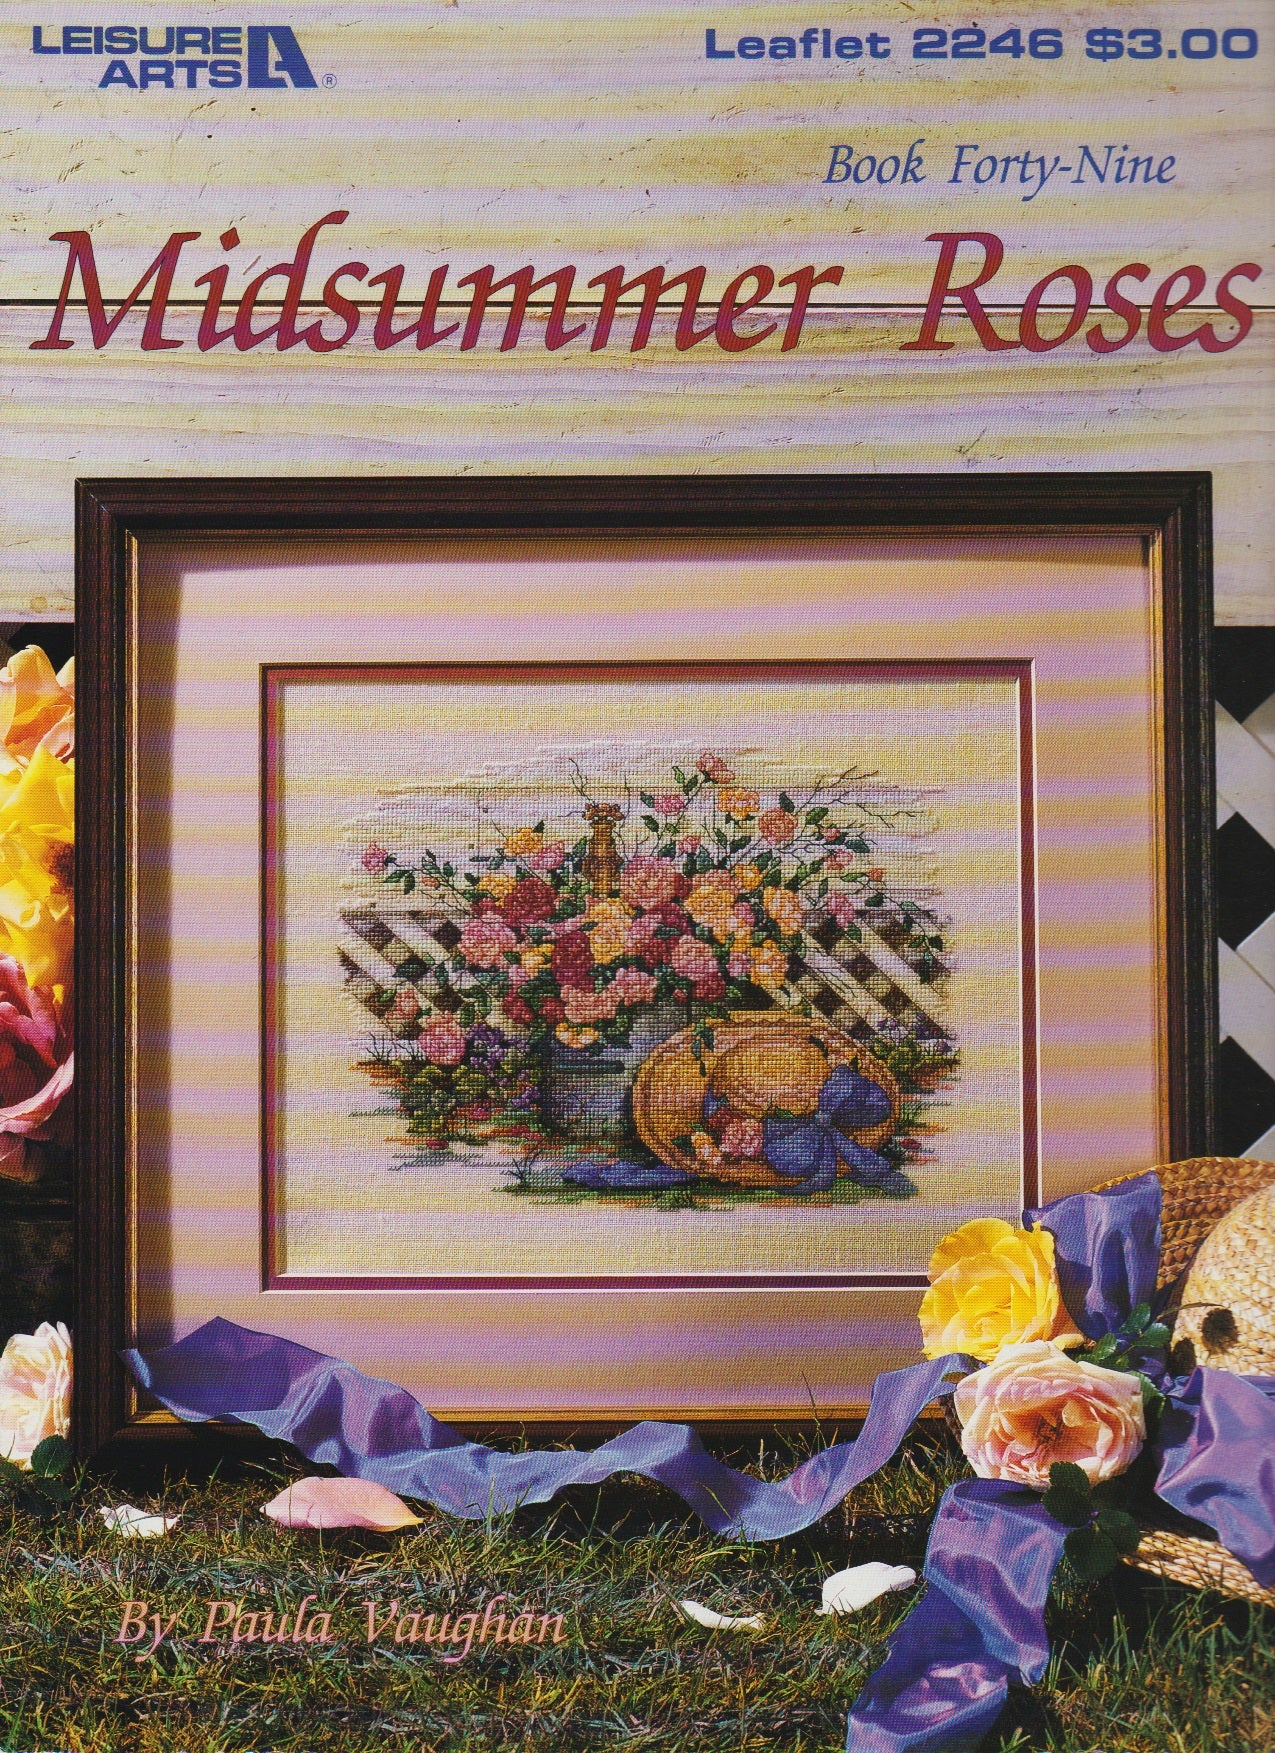 Leisure Arts Midsummer Roses 49 cross stitch pattern